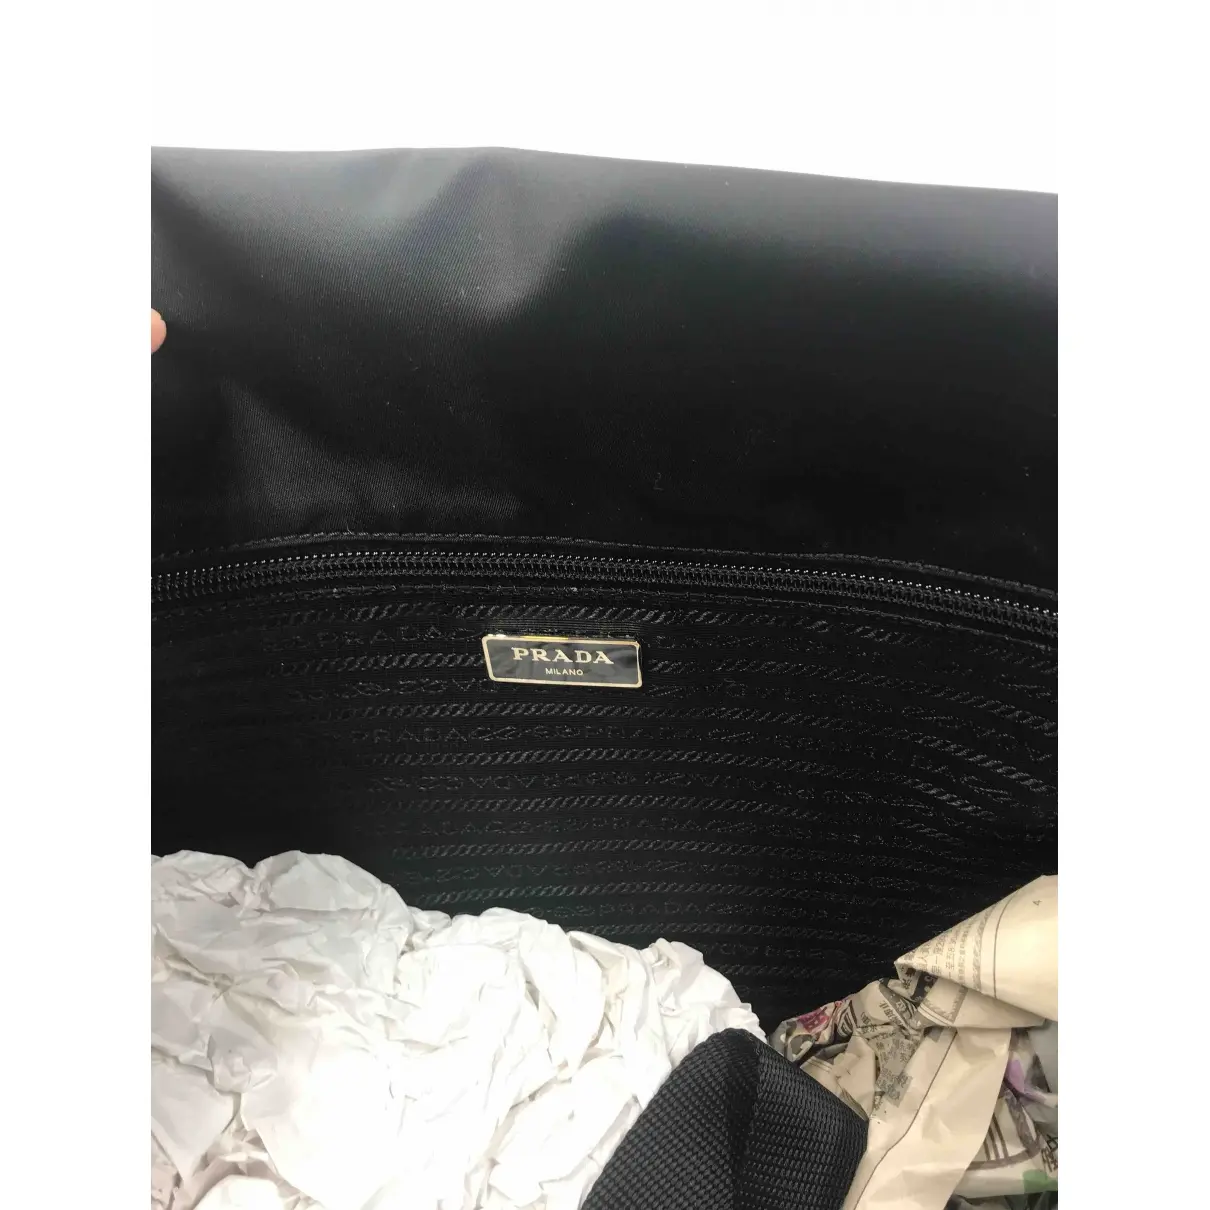 Buy Prada Cloth travel bag online